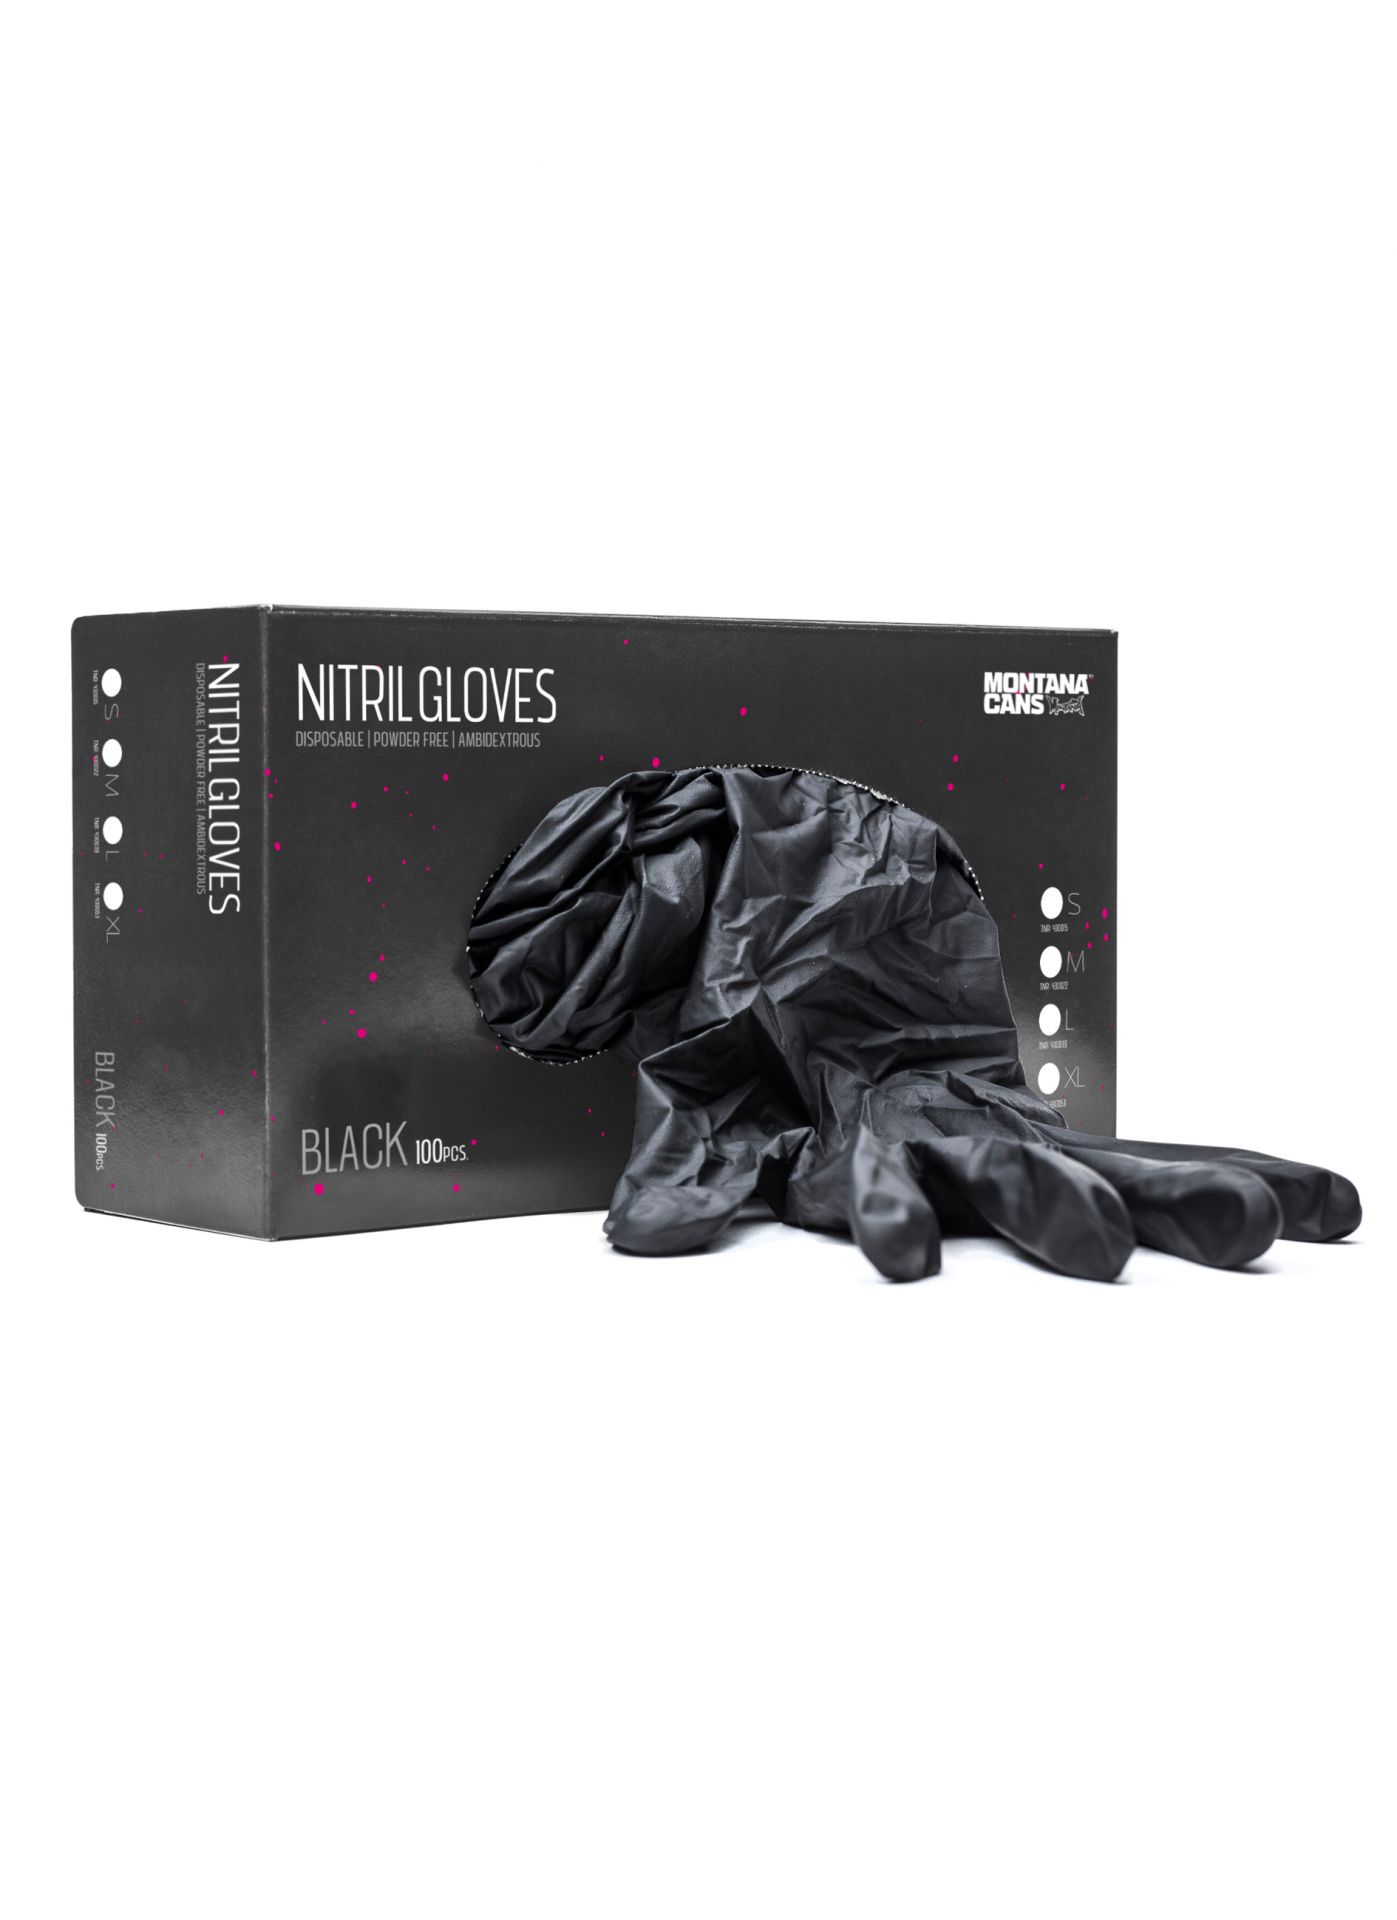 Montana Nitril Gloves - boîte de 100 gants